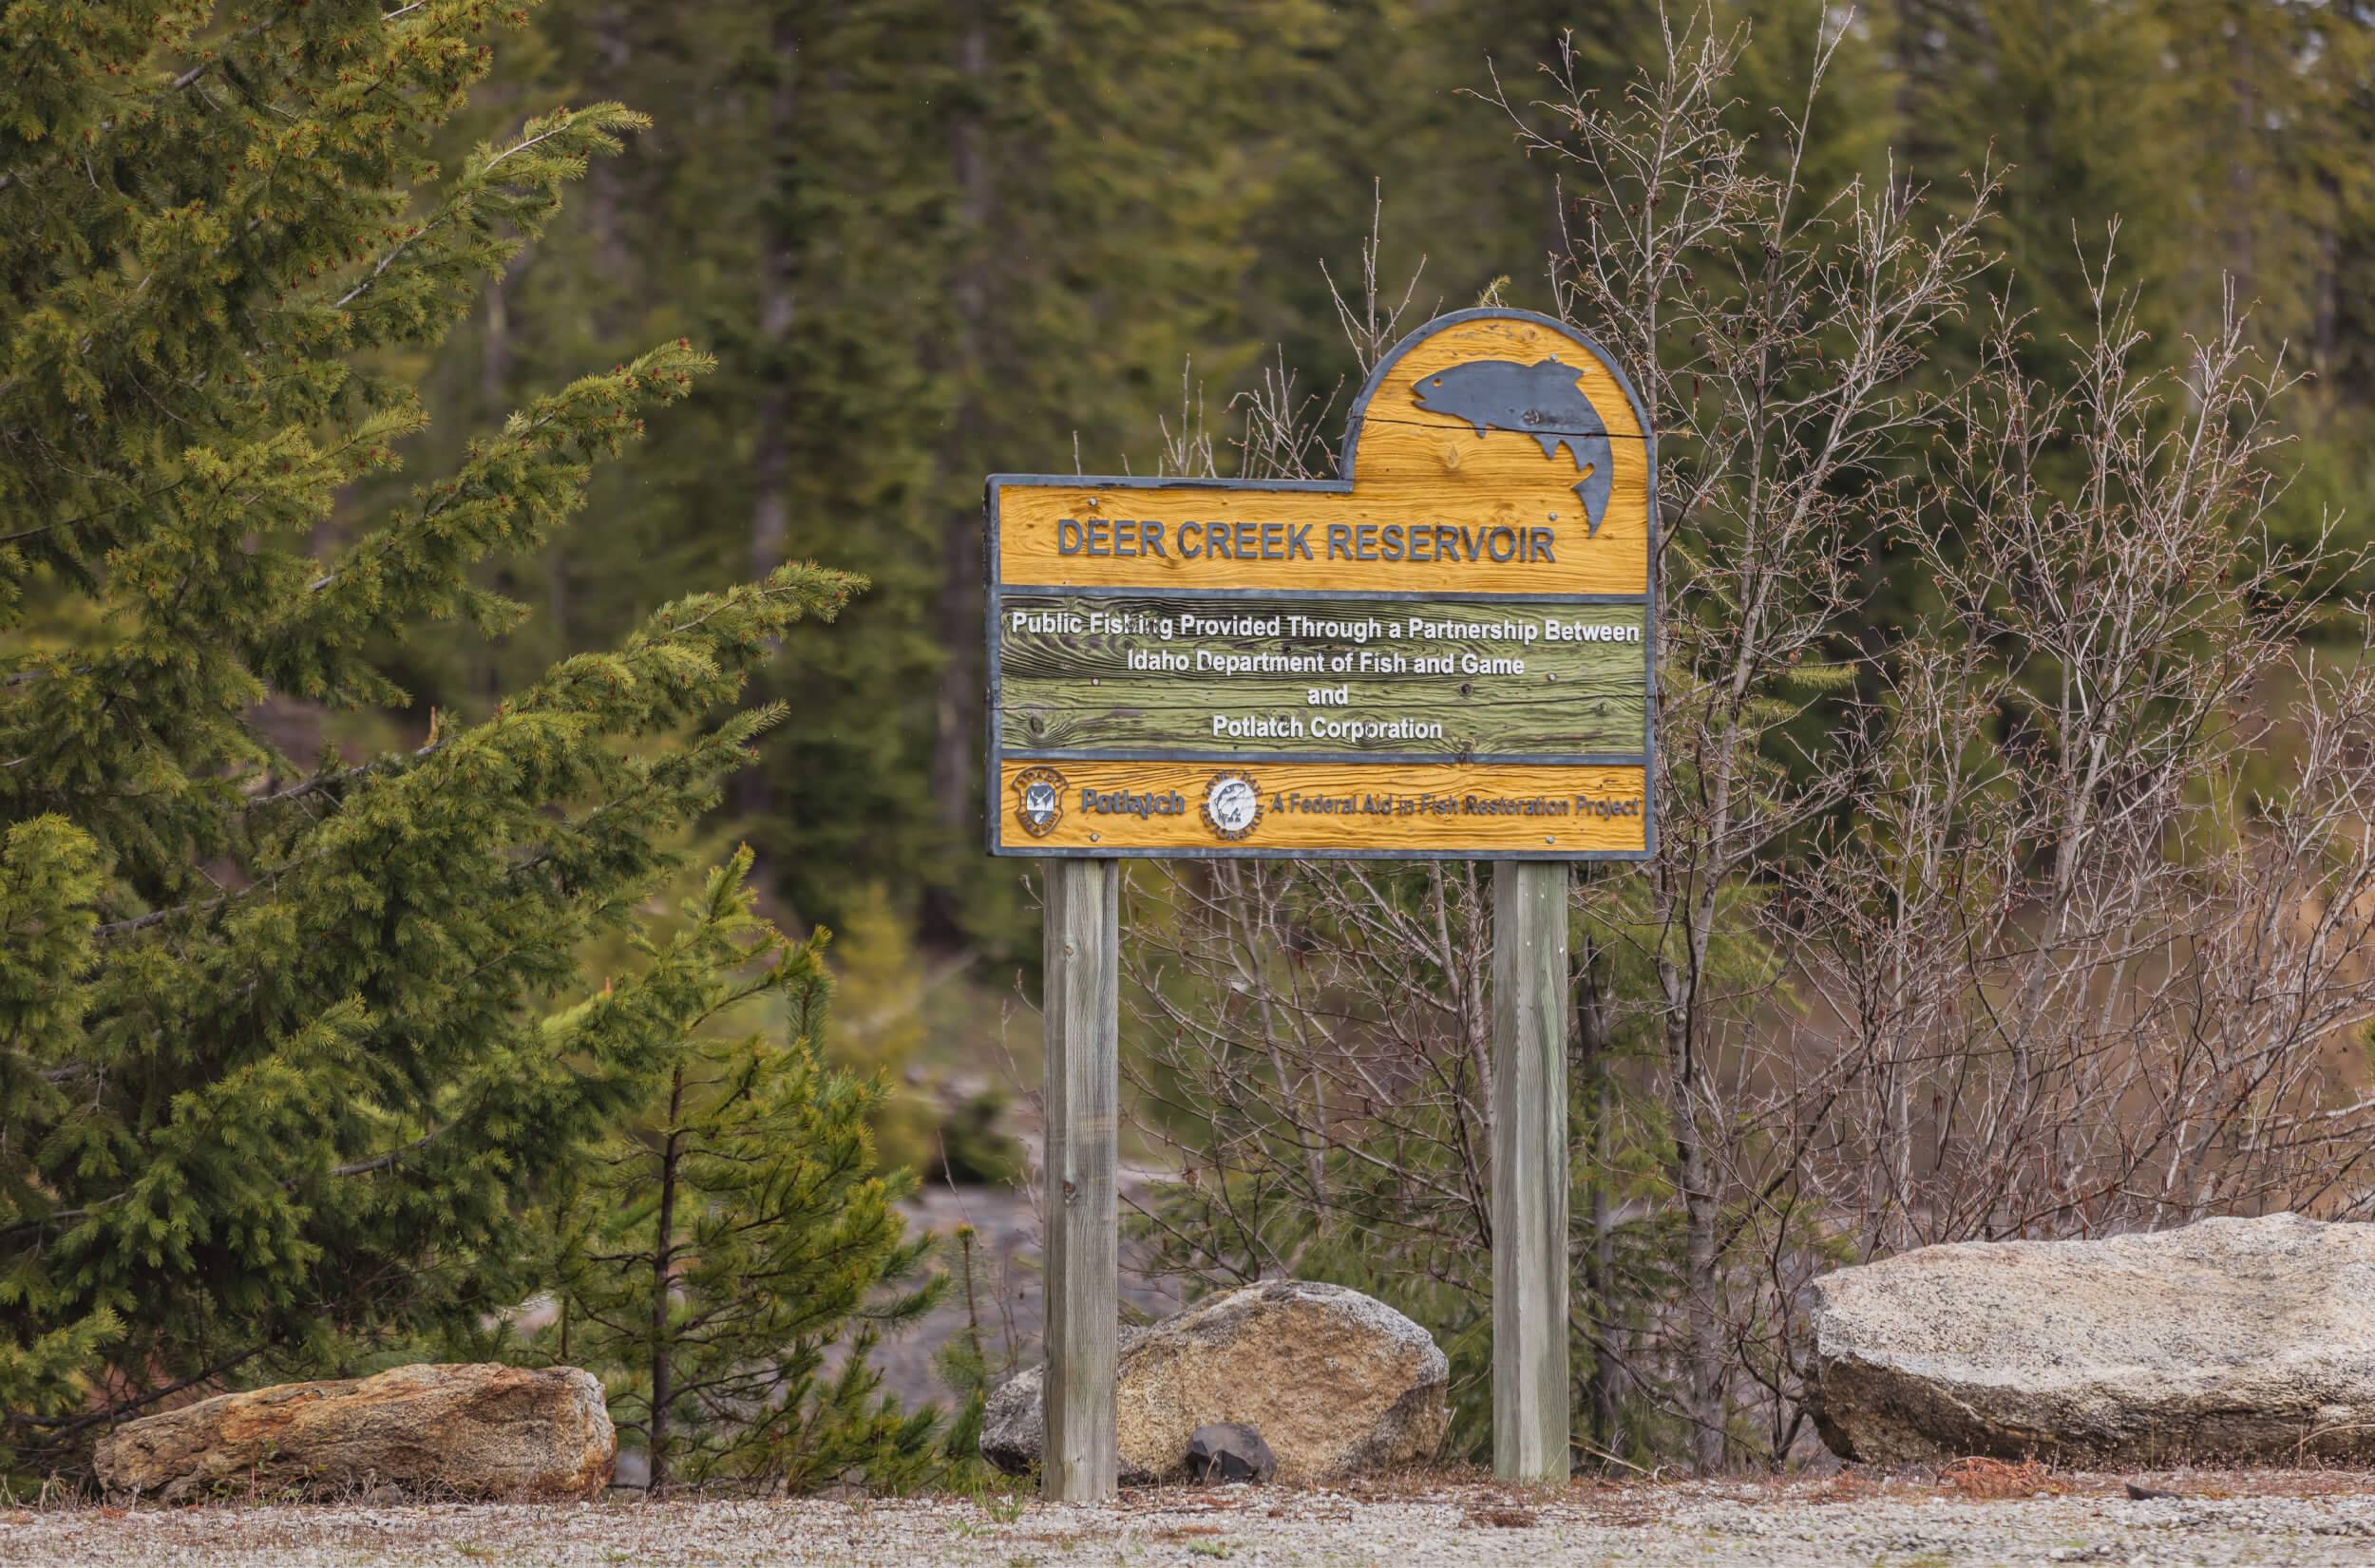 A painted wooden sign for Deer Creek Reservoir.